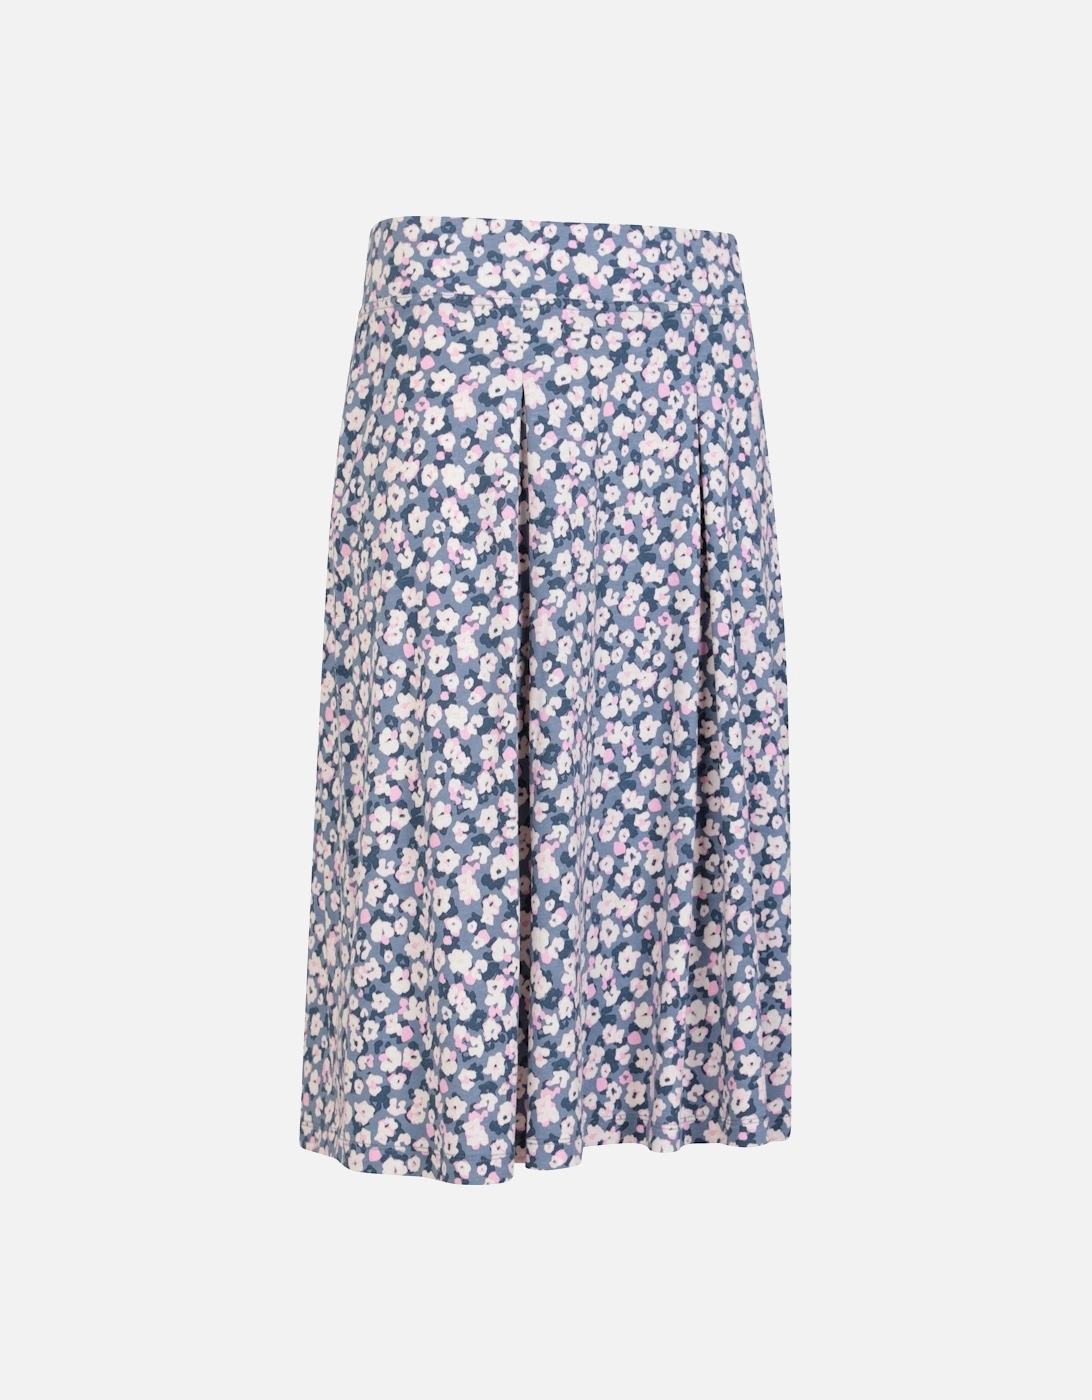 Womens/Ladies Waterfront Jersey Skirt